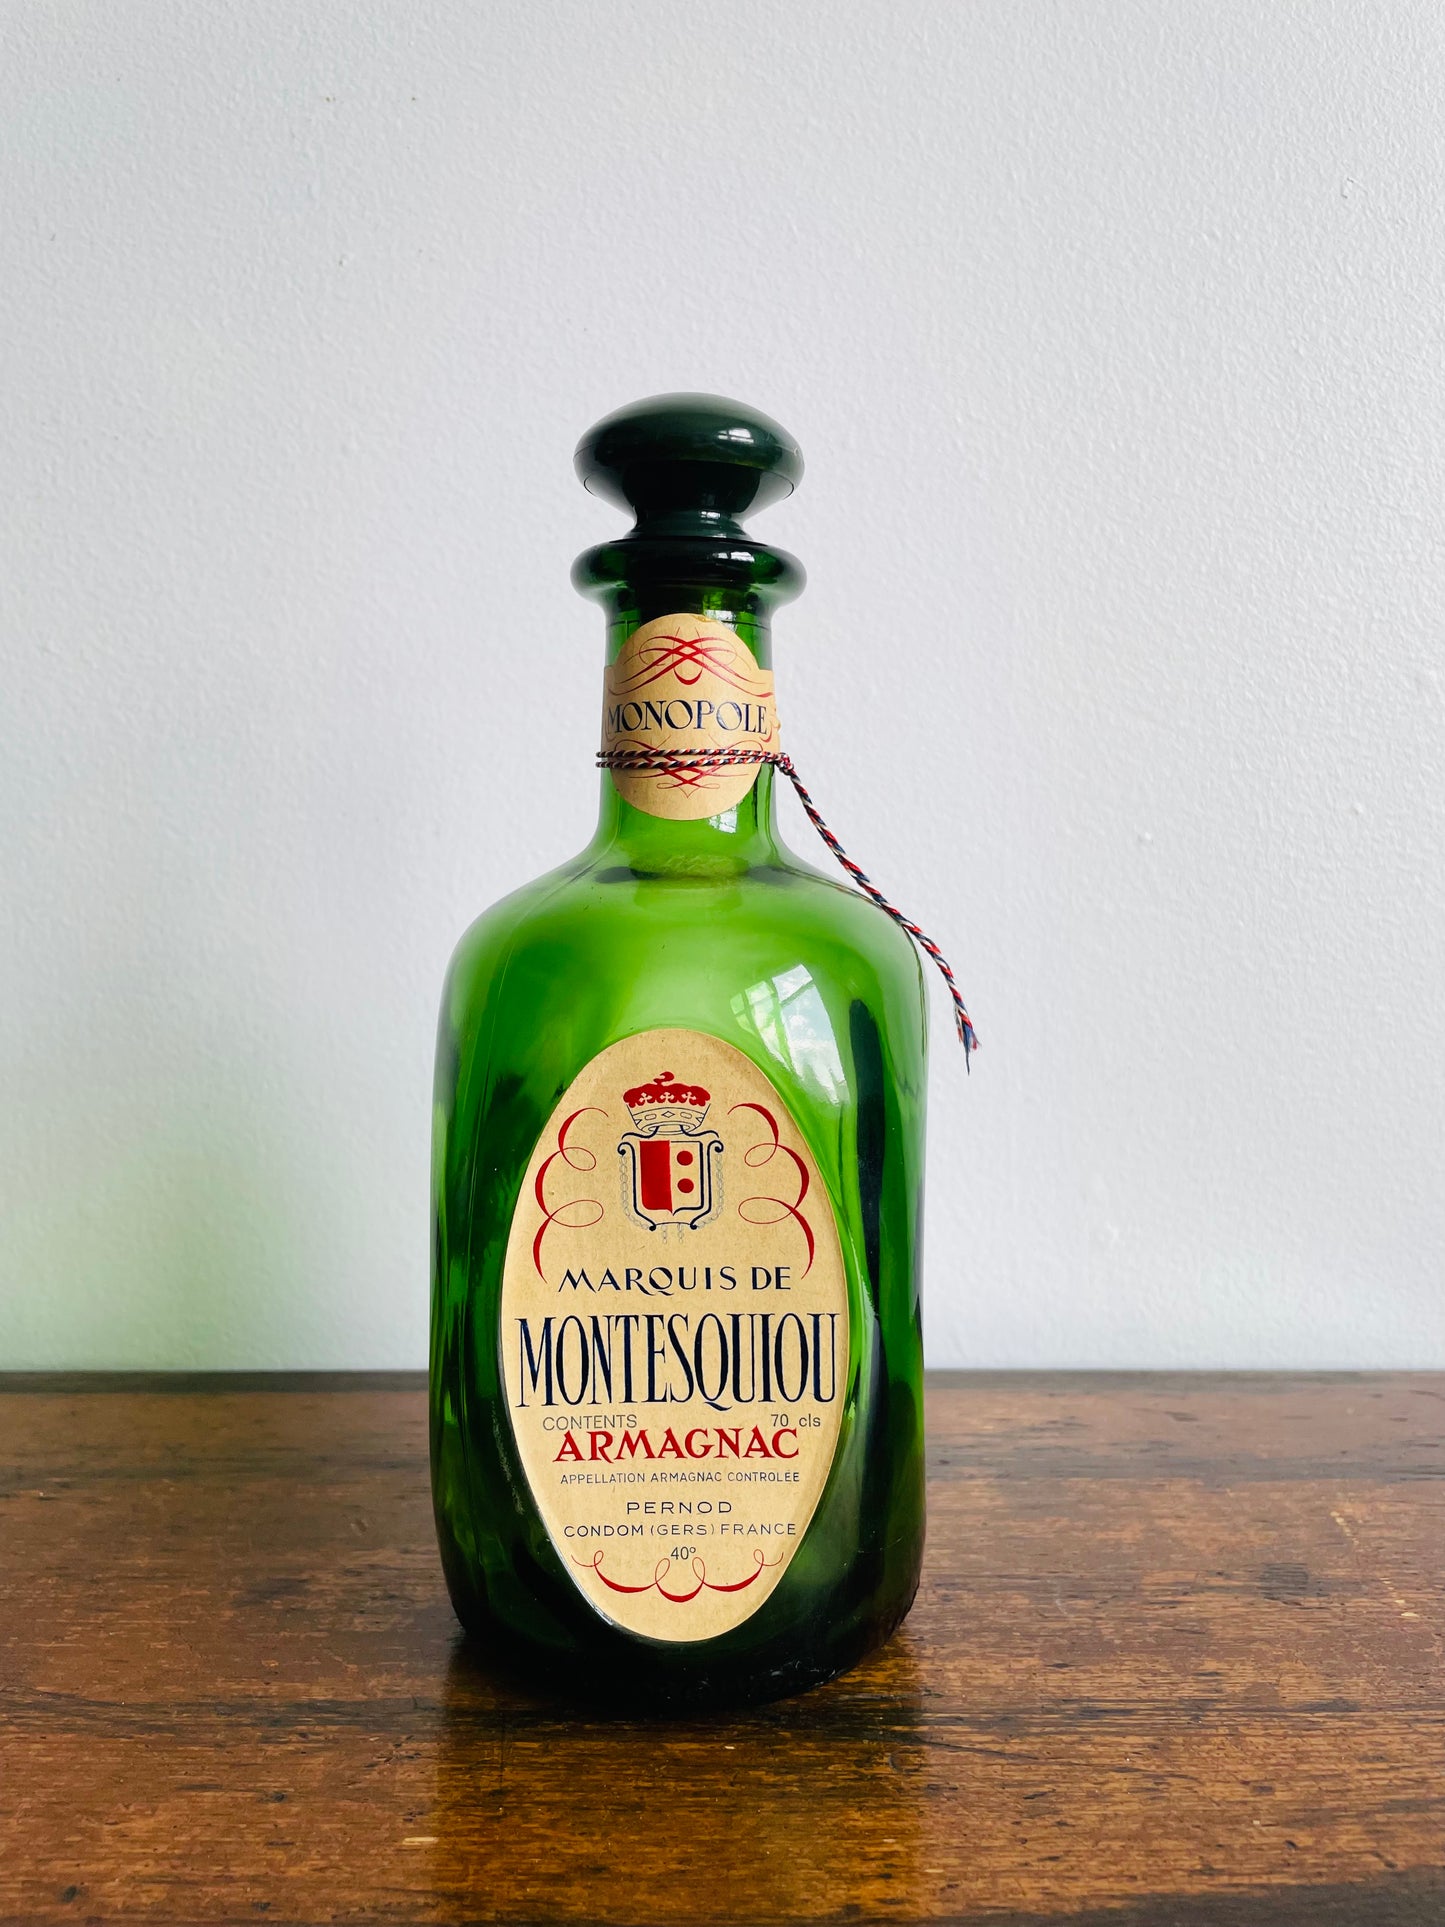 1960s/70s Marquis De Montesquiou Armagnac French Brandy Green Glass Bottle